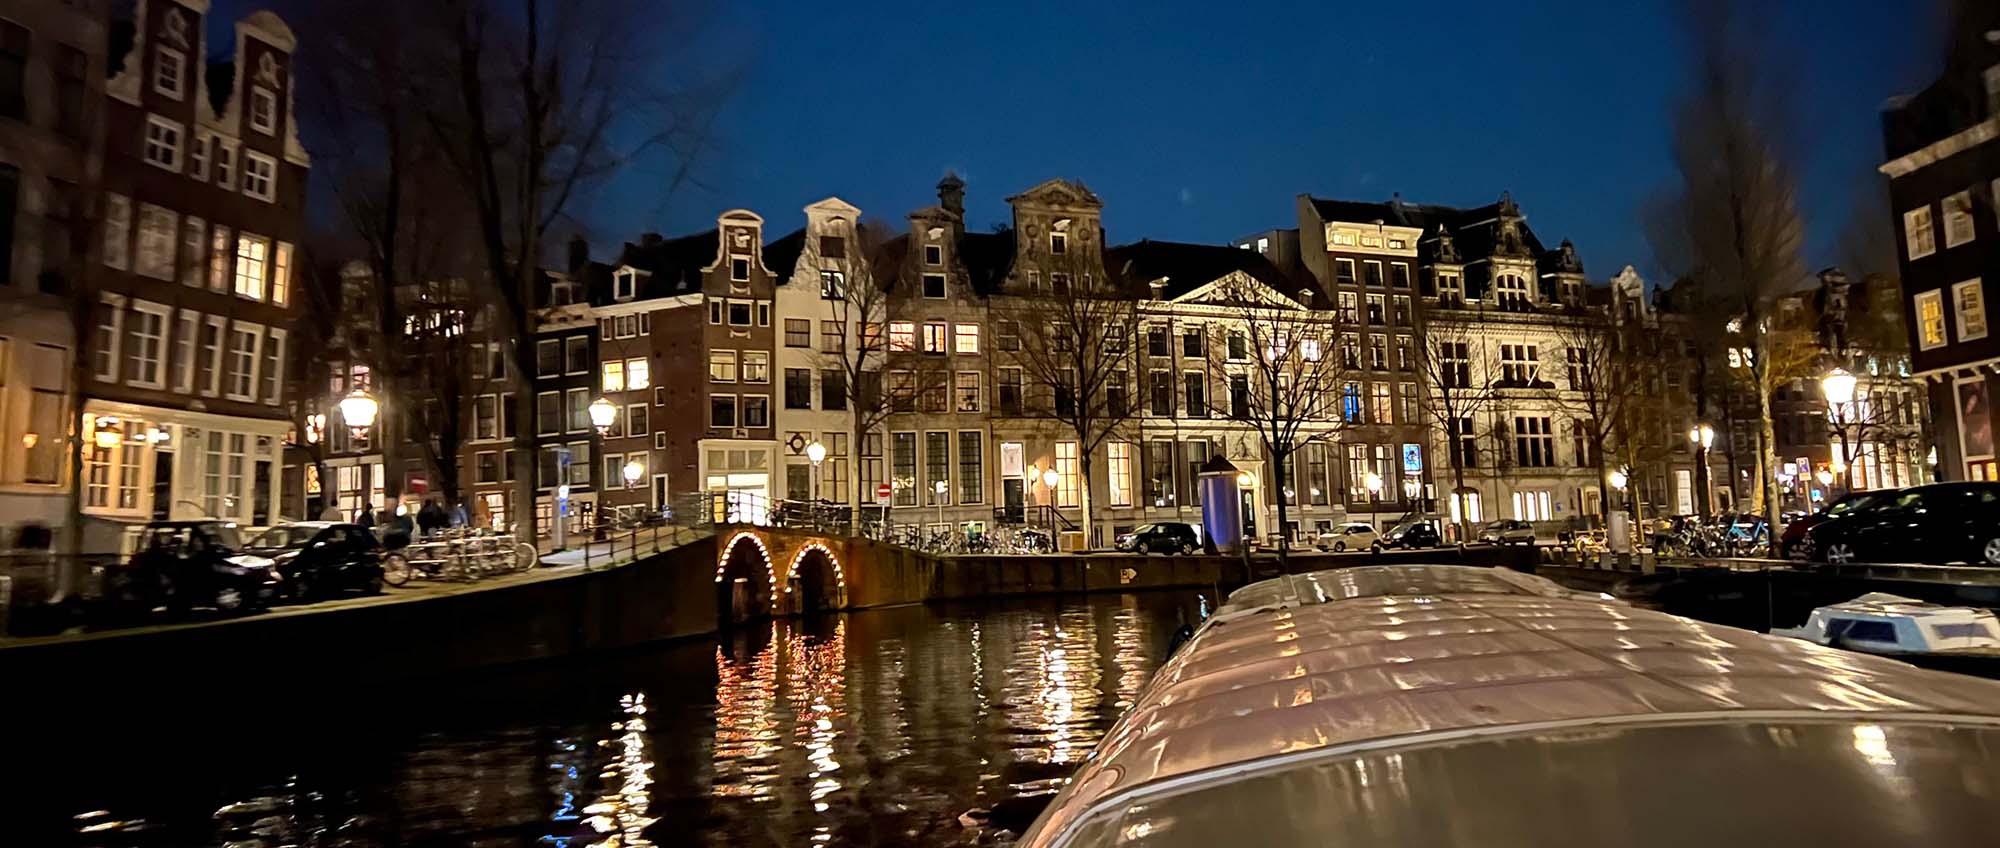 Amsterdam city at night